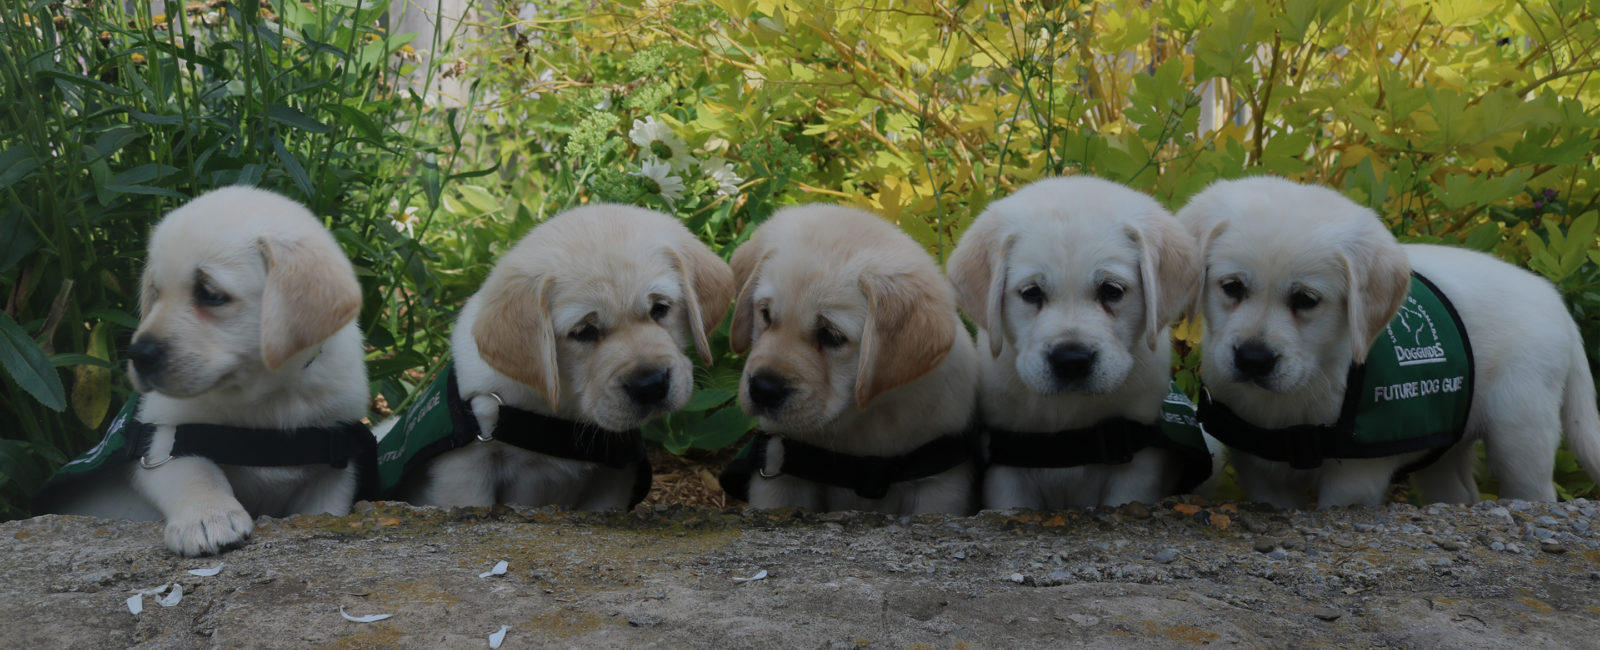 golden retriever future Dog Guide puppies